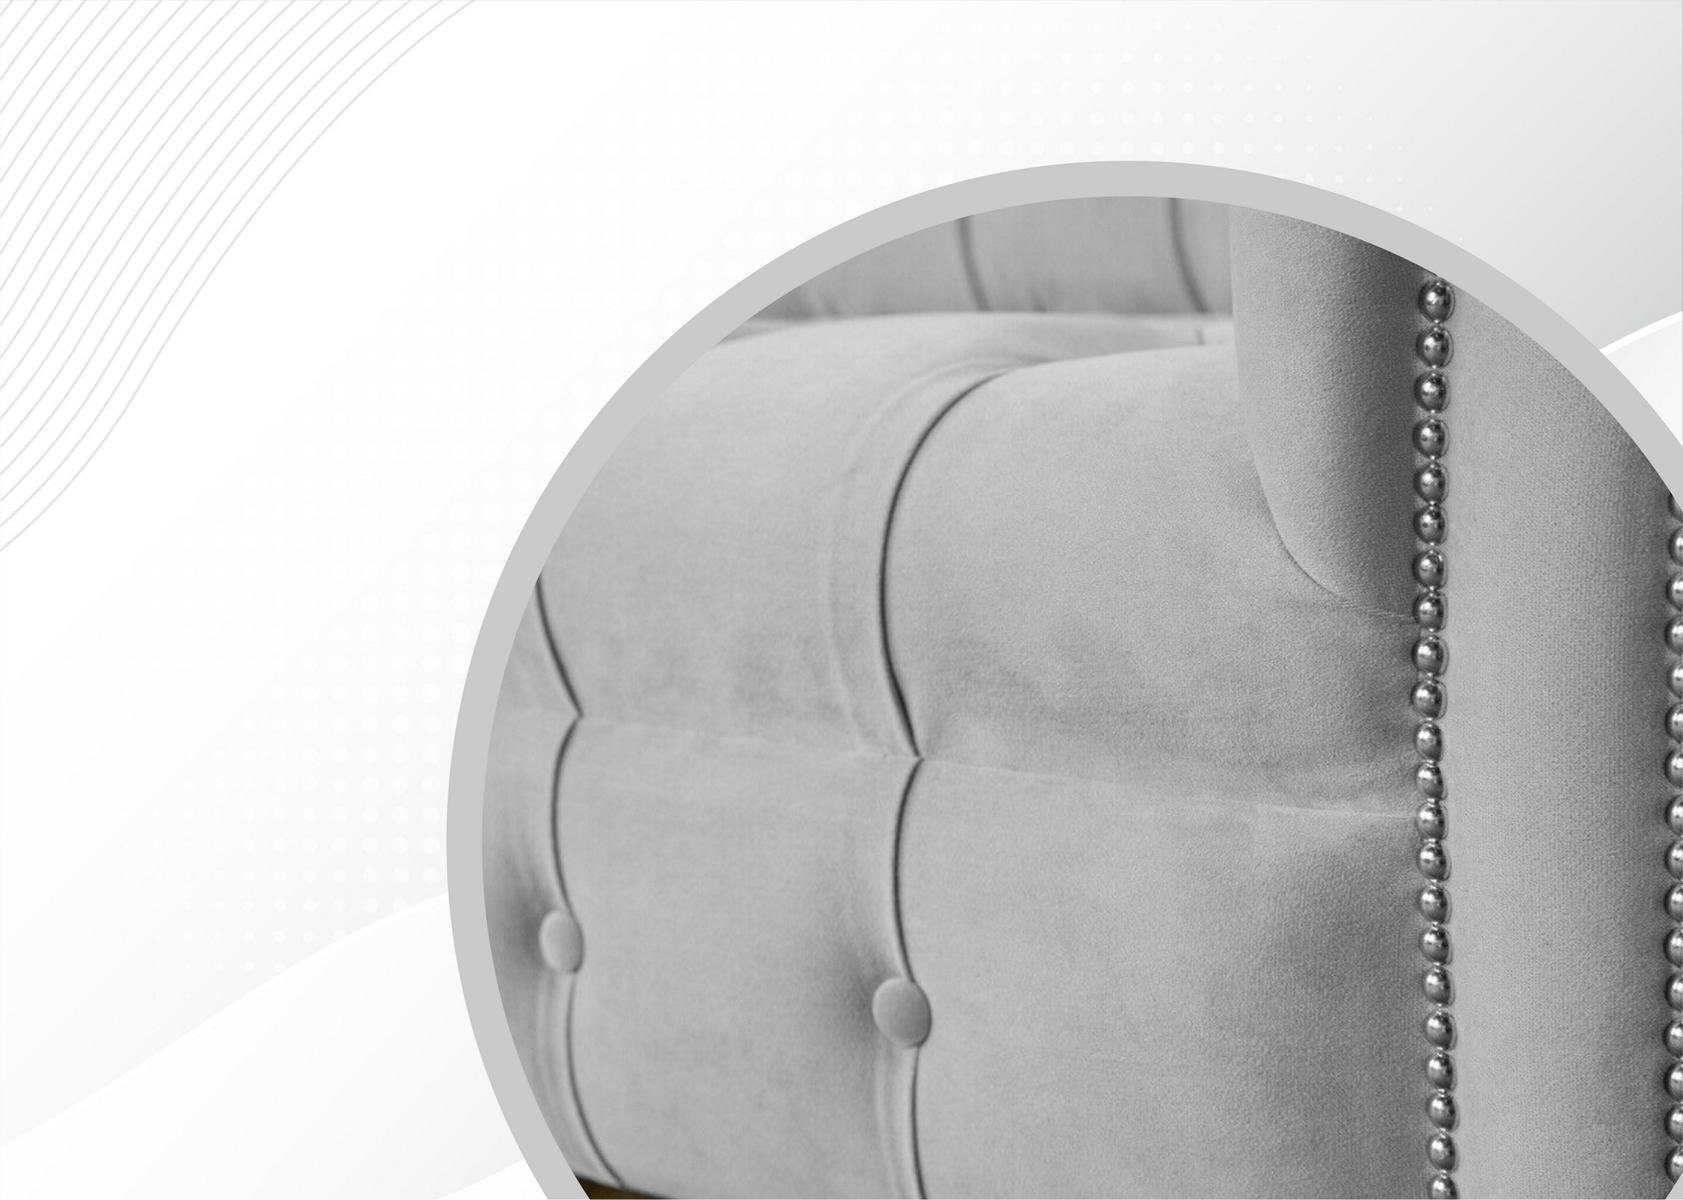 Sitzer Sofa Chesterfield JVmoebel Chesterfield-Sofa, 225 3 cm Couch Design